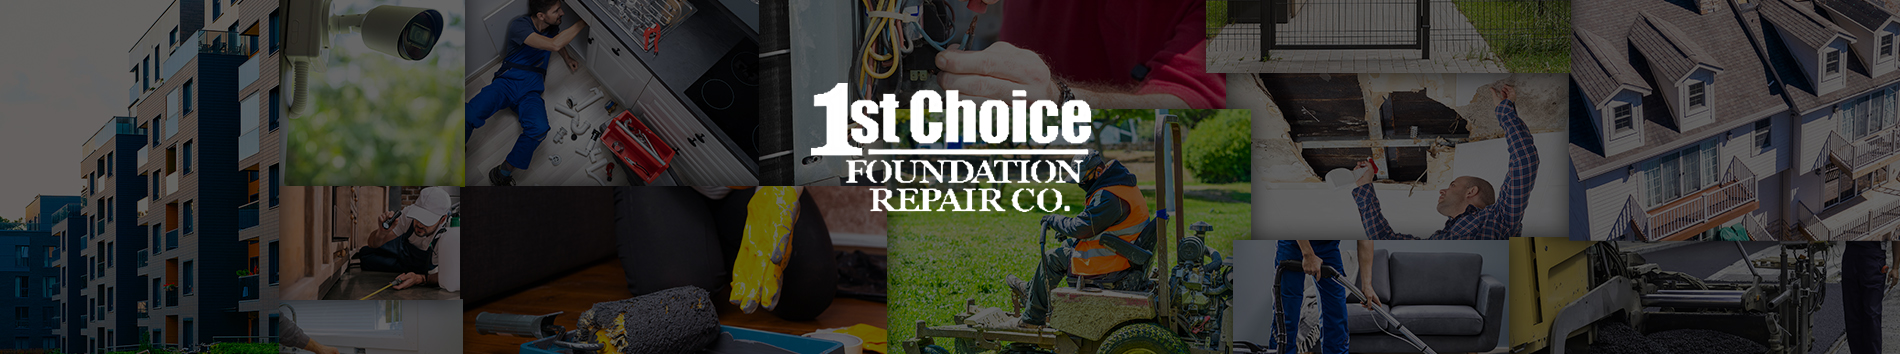 1st Choice Foundation Repair Co.